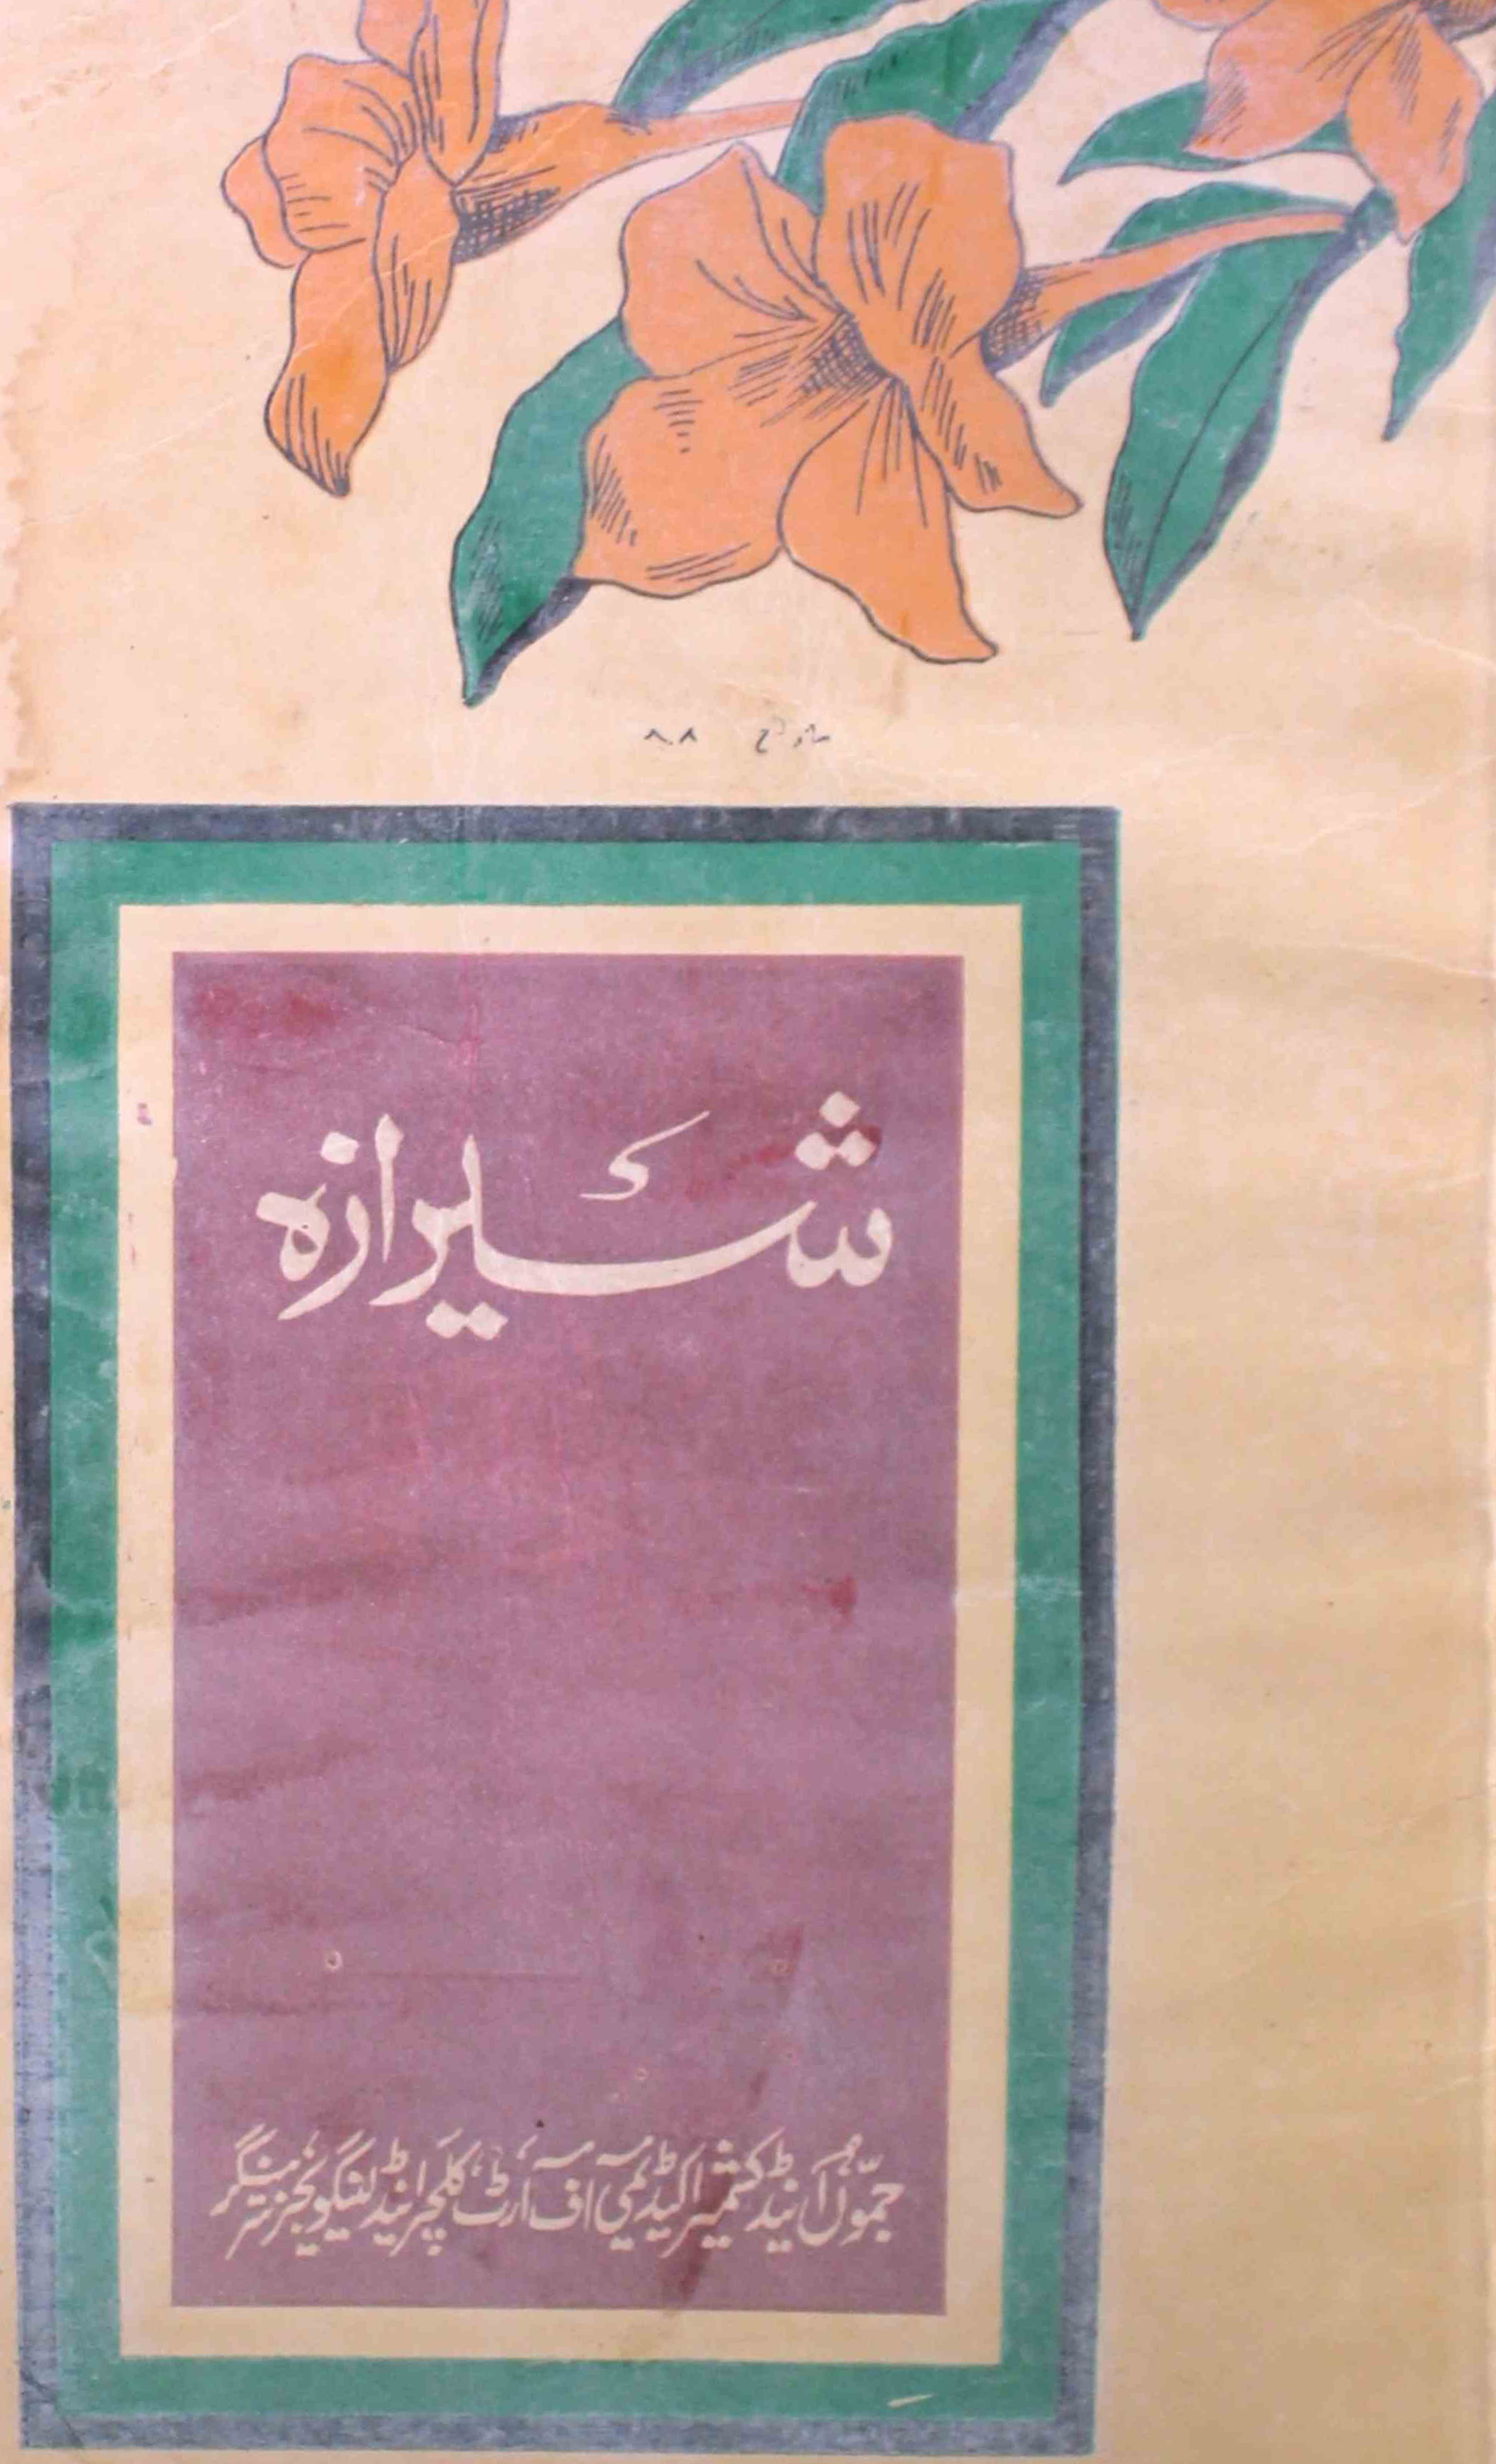 sheeraza-shumara-number-003-mohammad-yusuf-tayeng-magazines-11